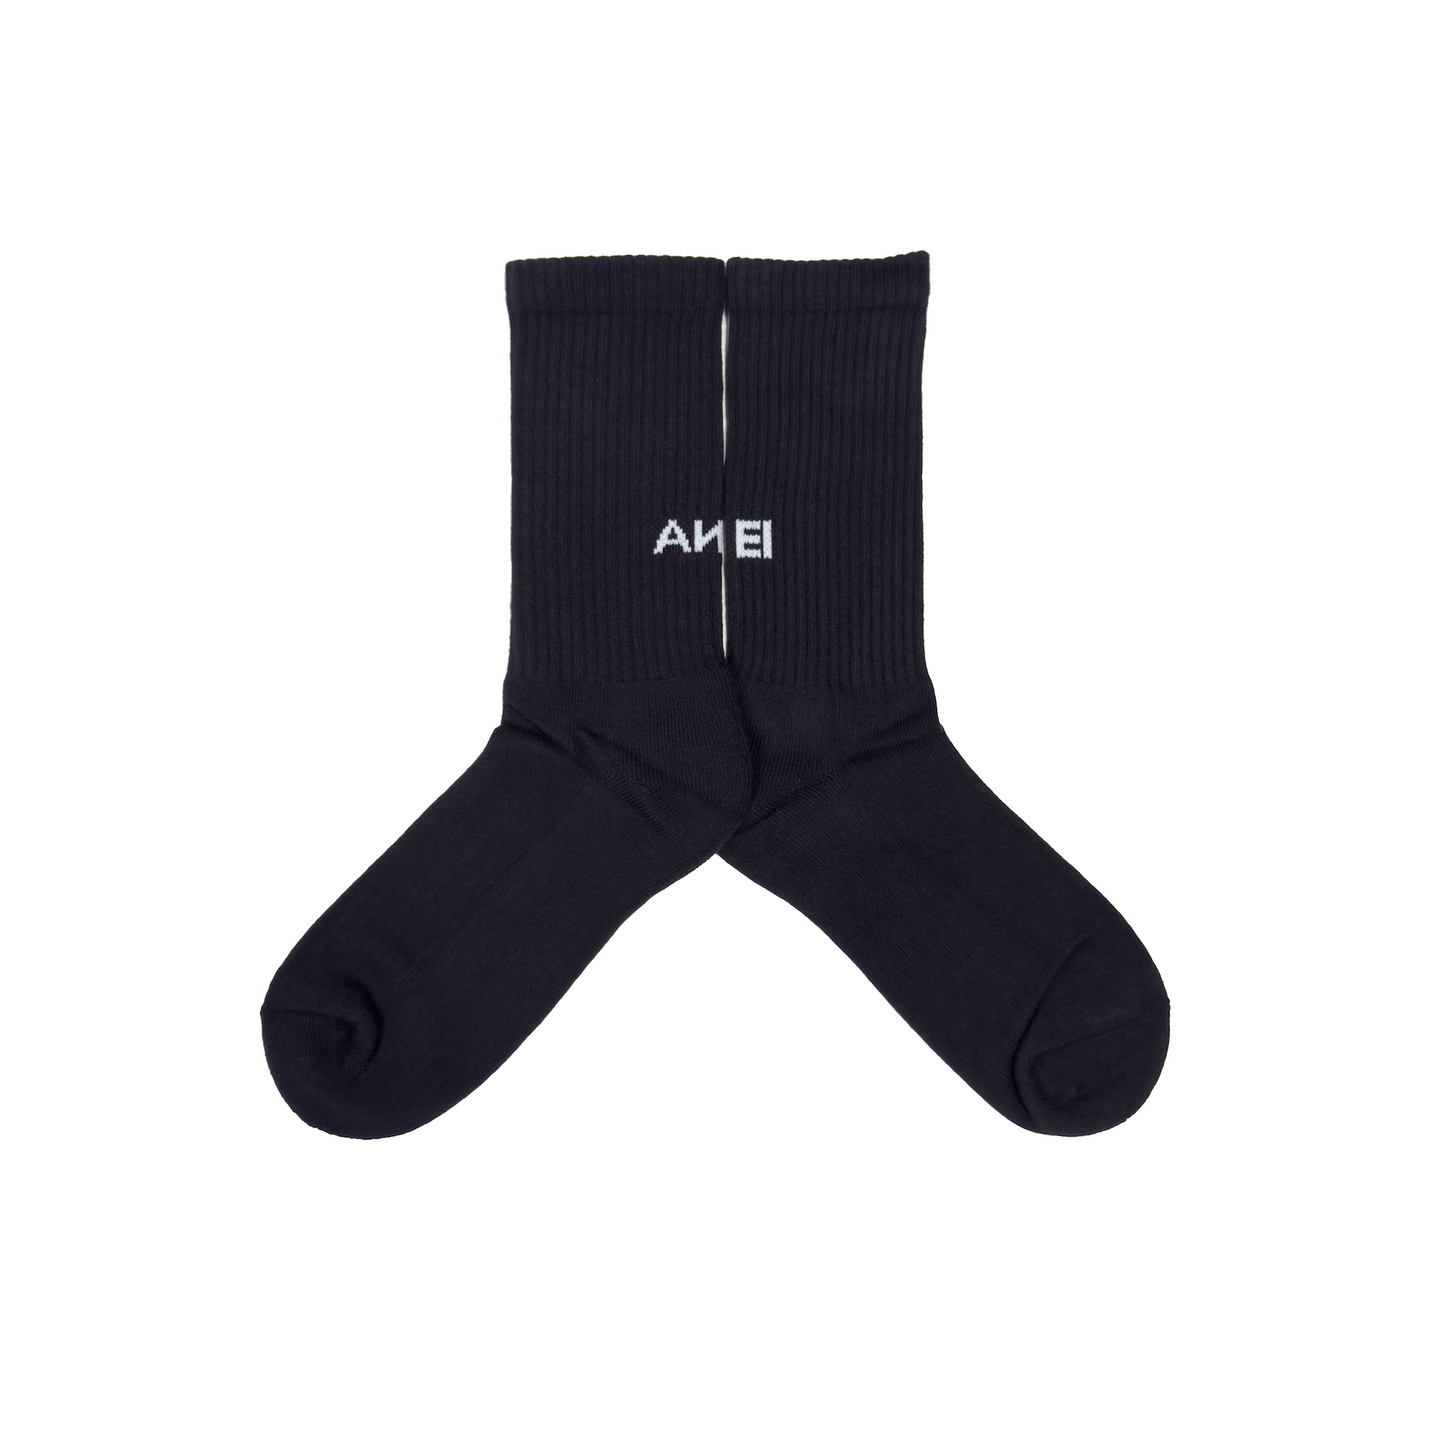 ANTI Socks